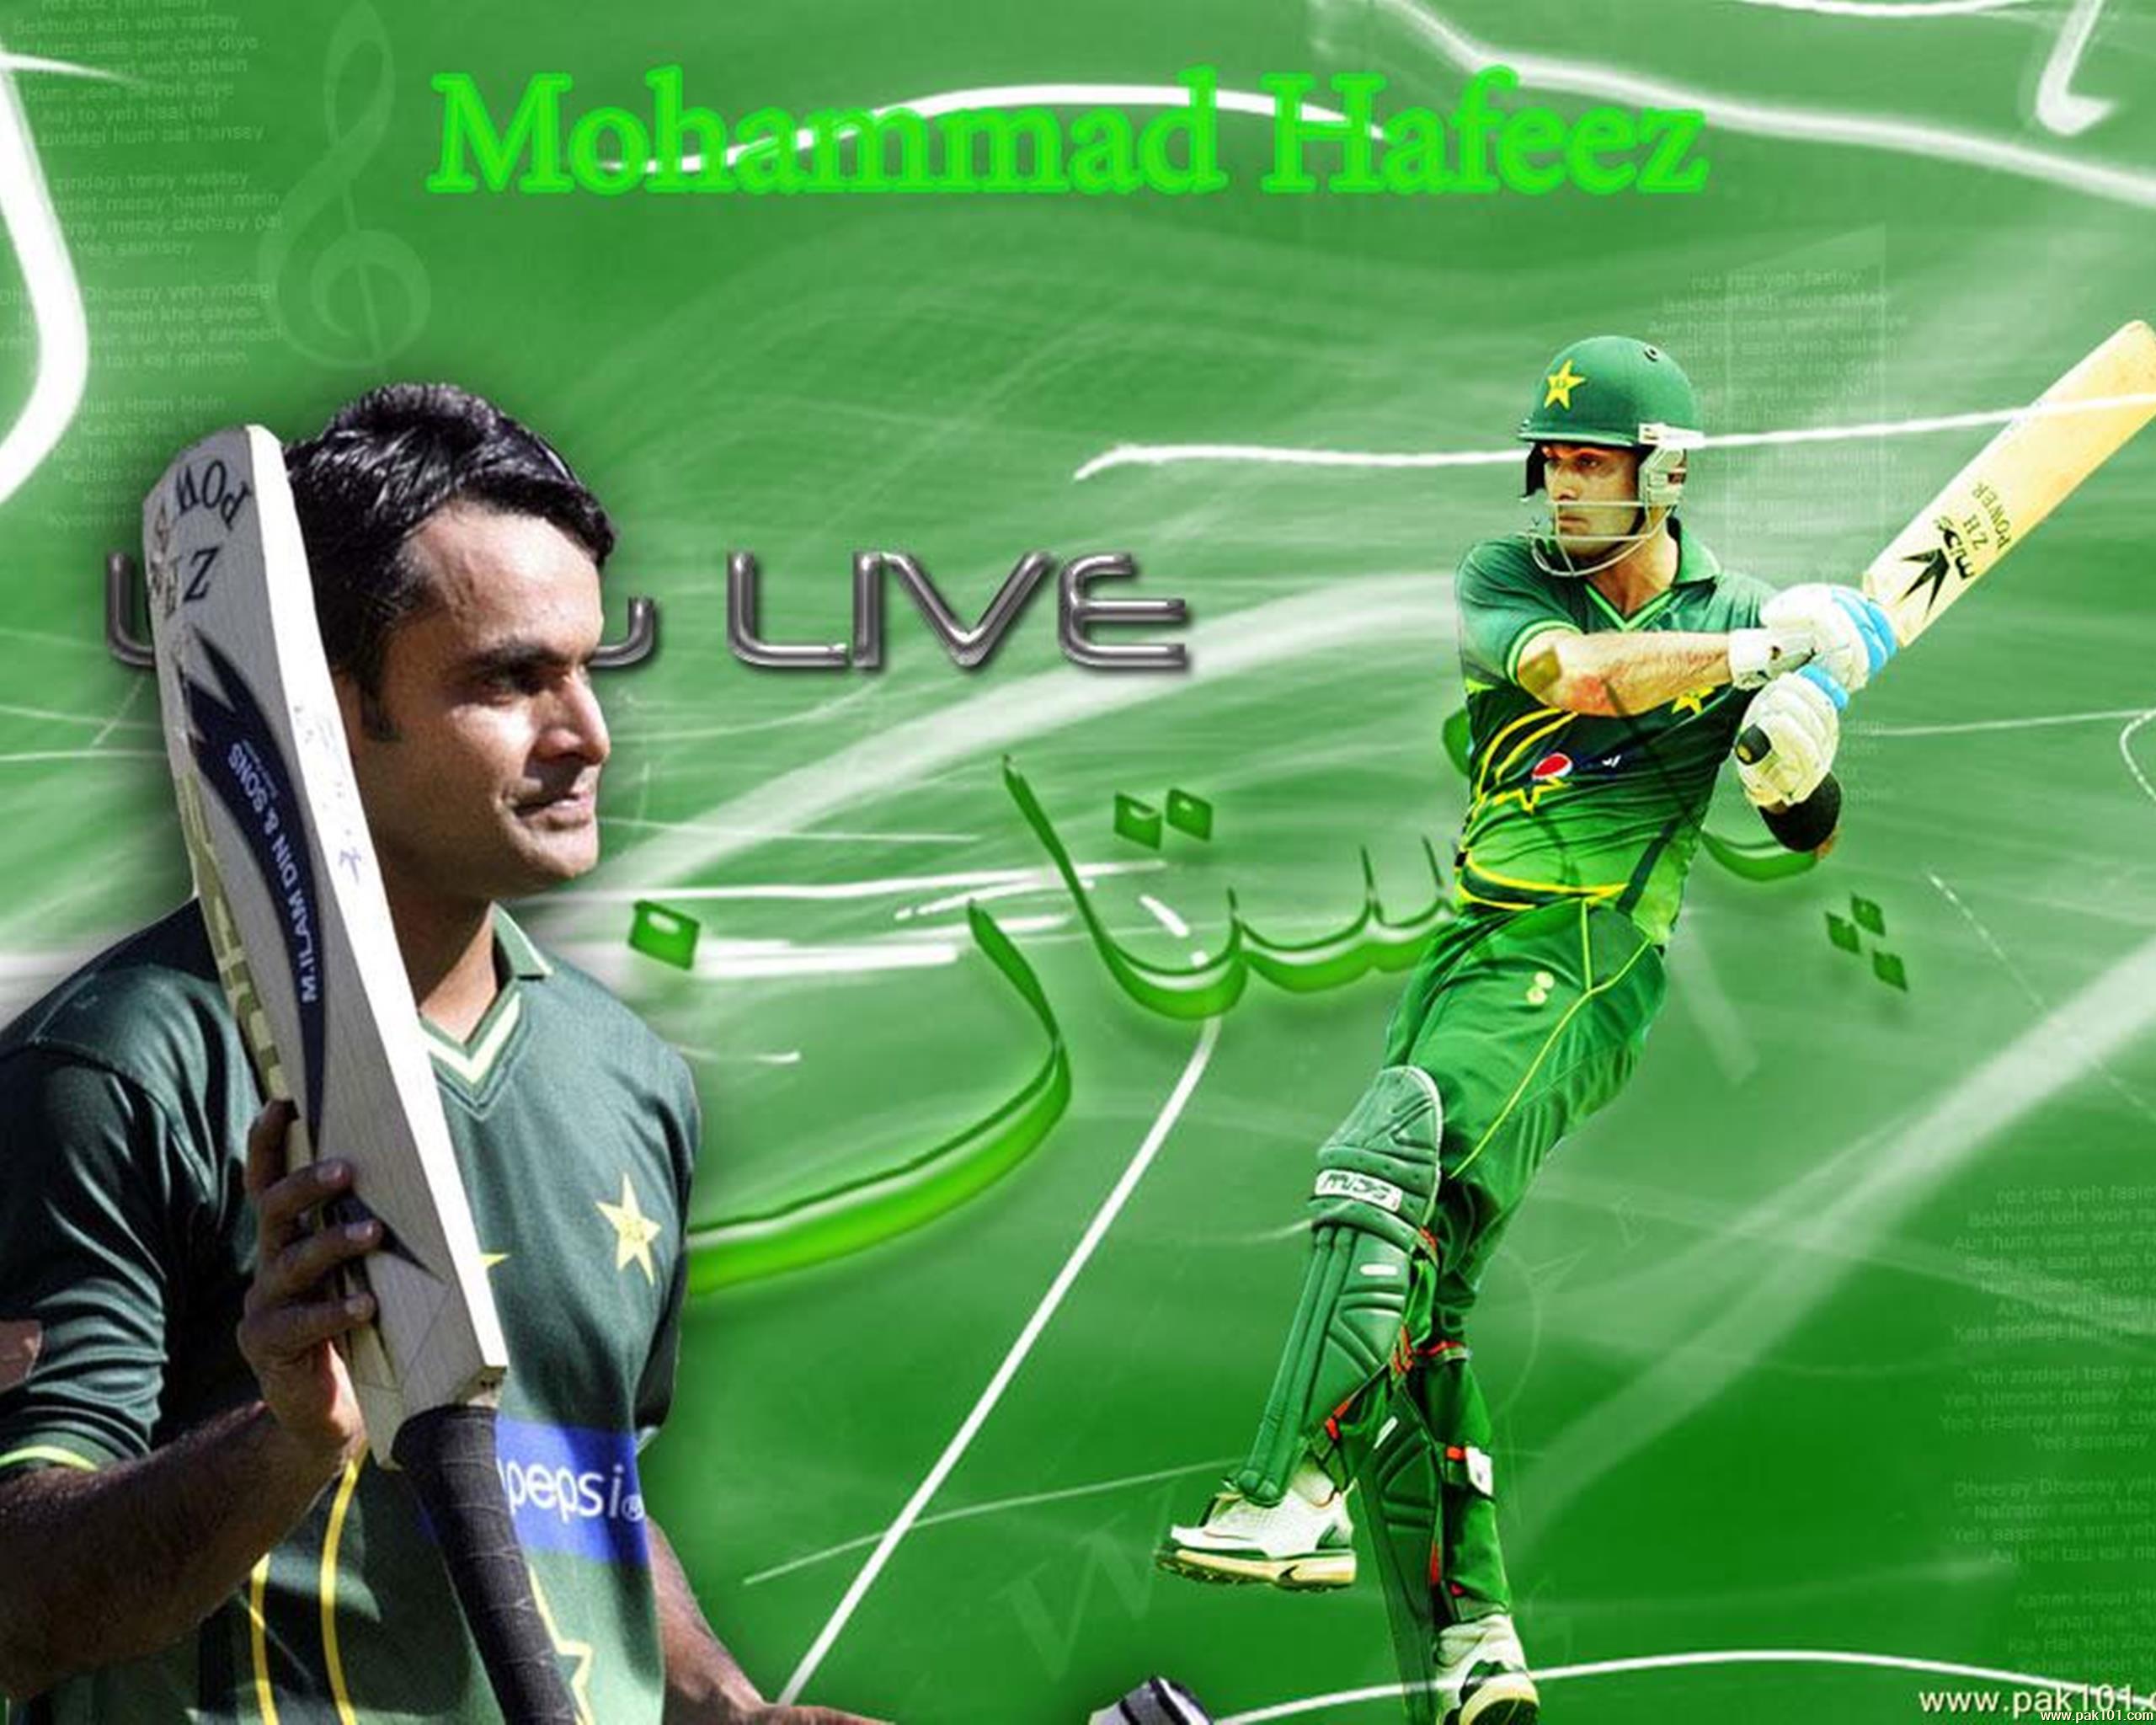 Wallpapers Cricketers Mohammad Hafeez Mohammad Hafeez high 2560x2048